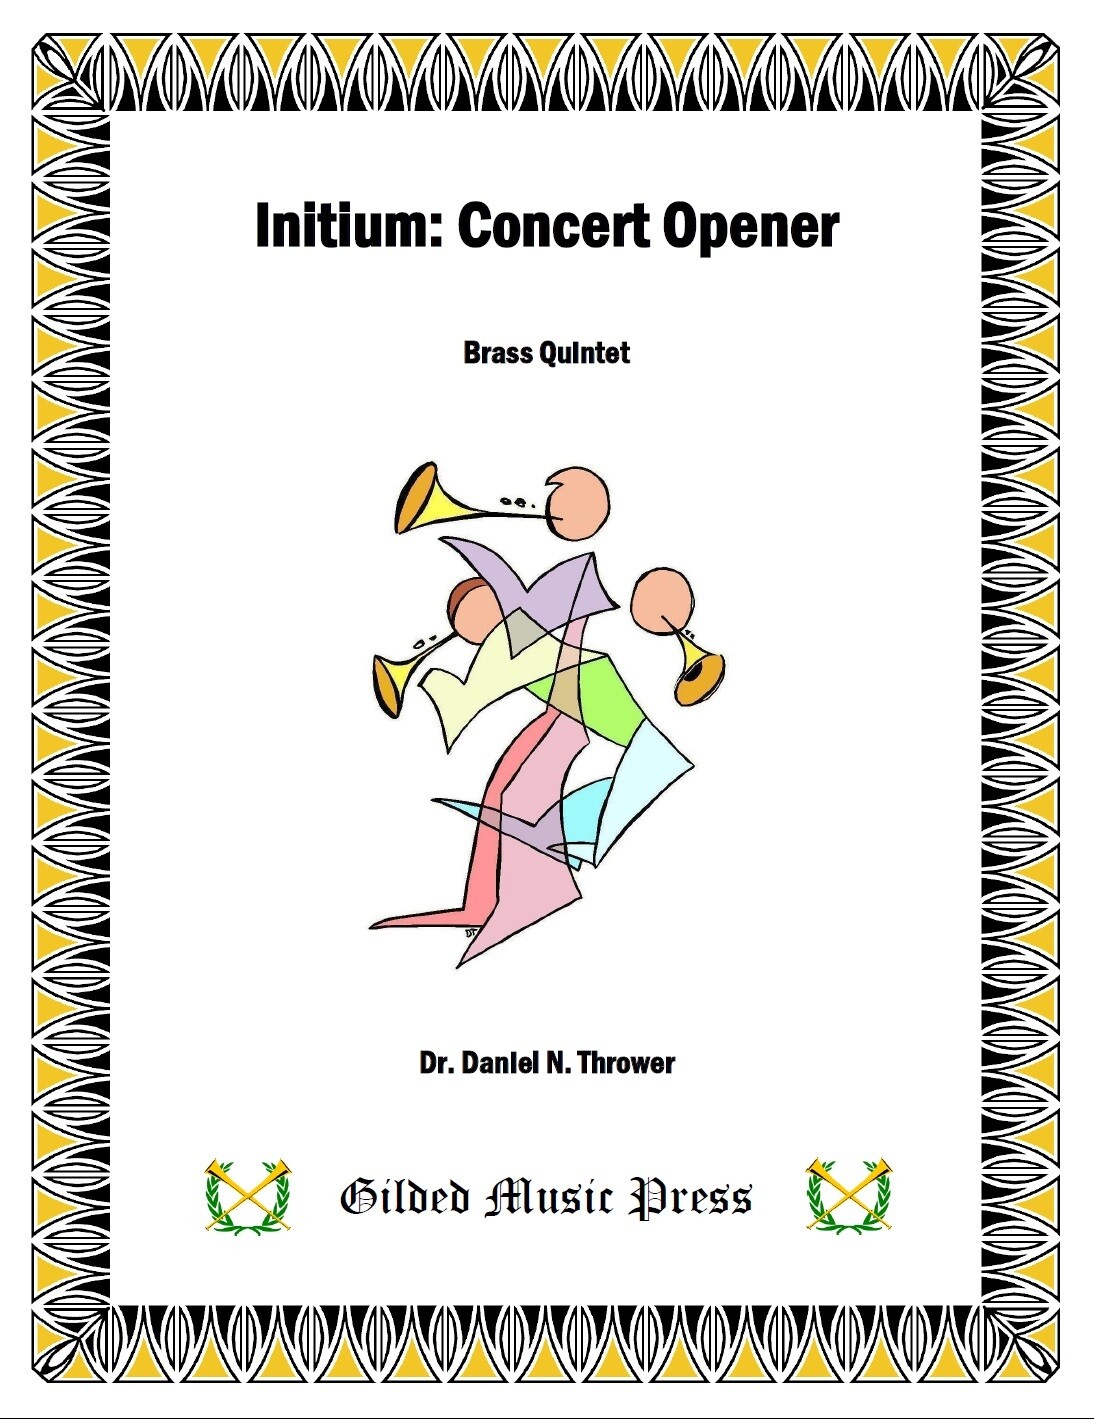 GMP 3006: Initium: Concert Opener (Brass Quintet), Dr. Daniel Thrower